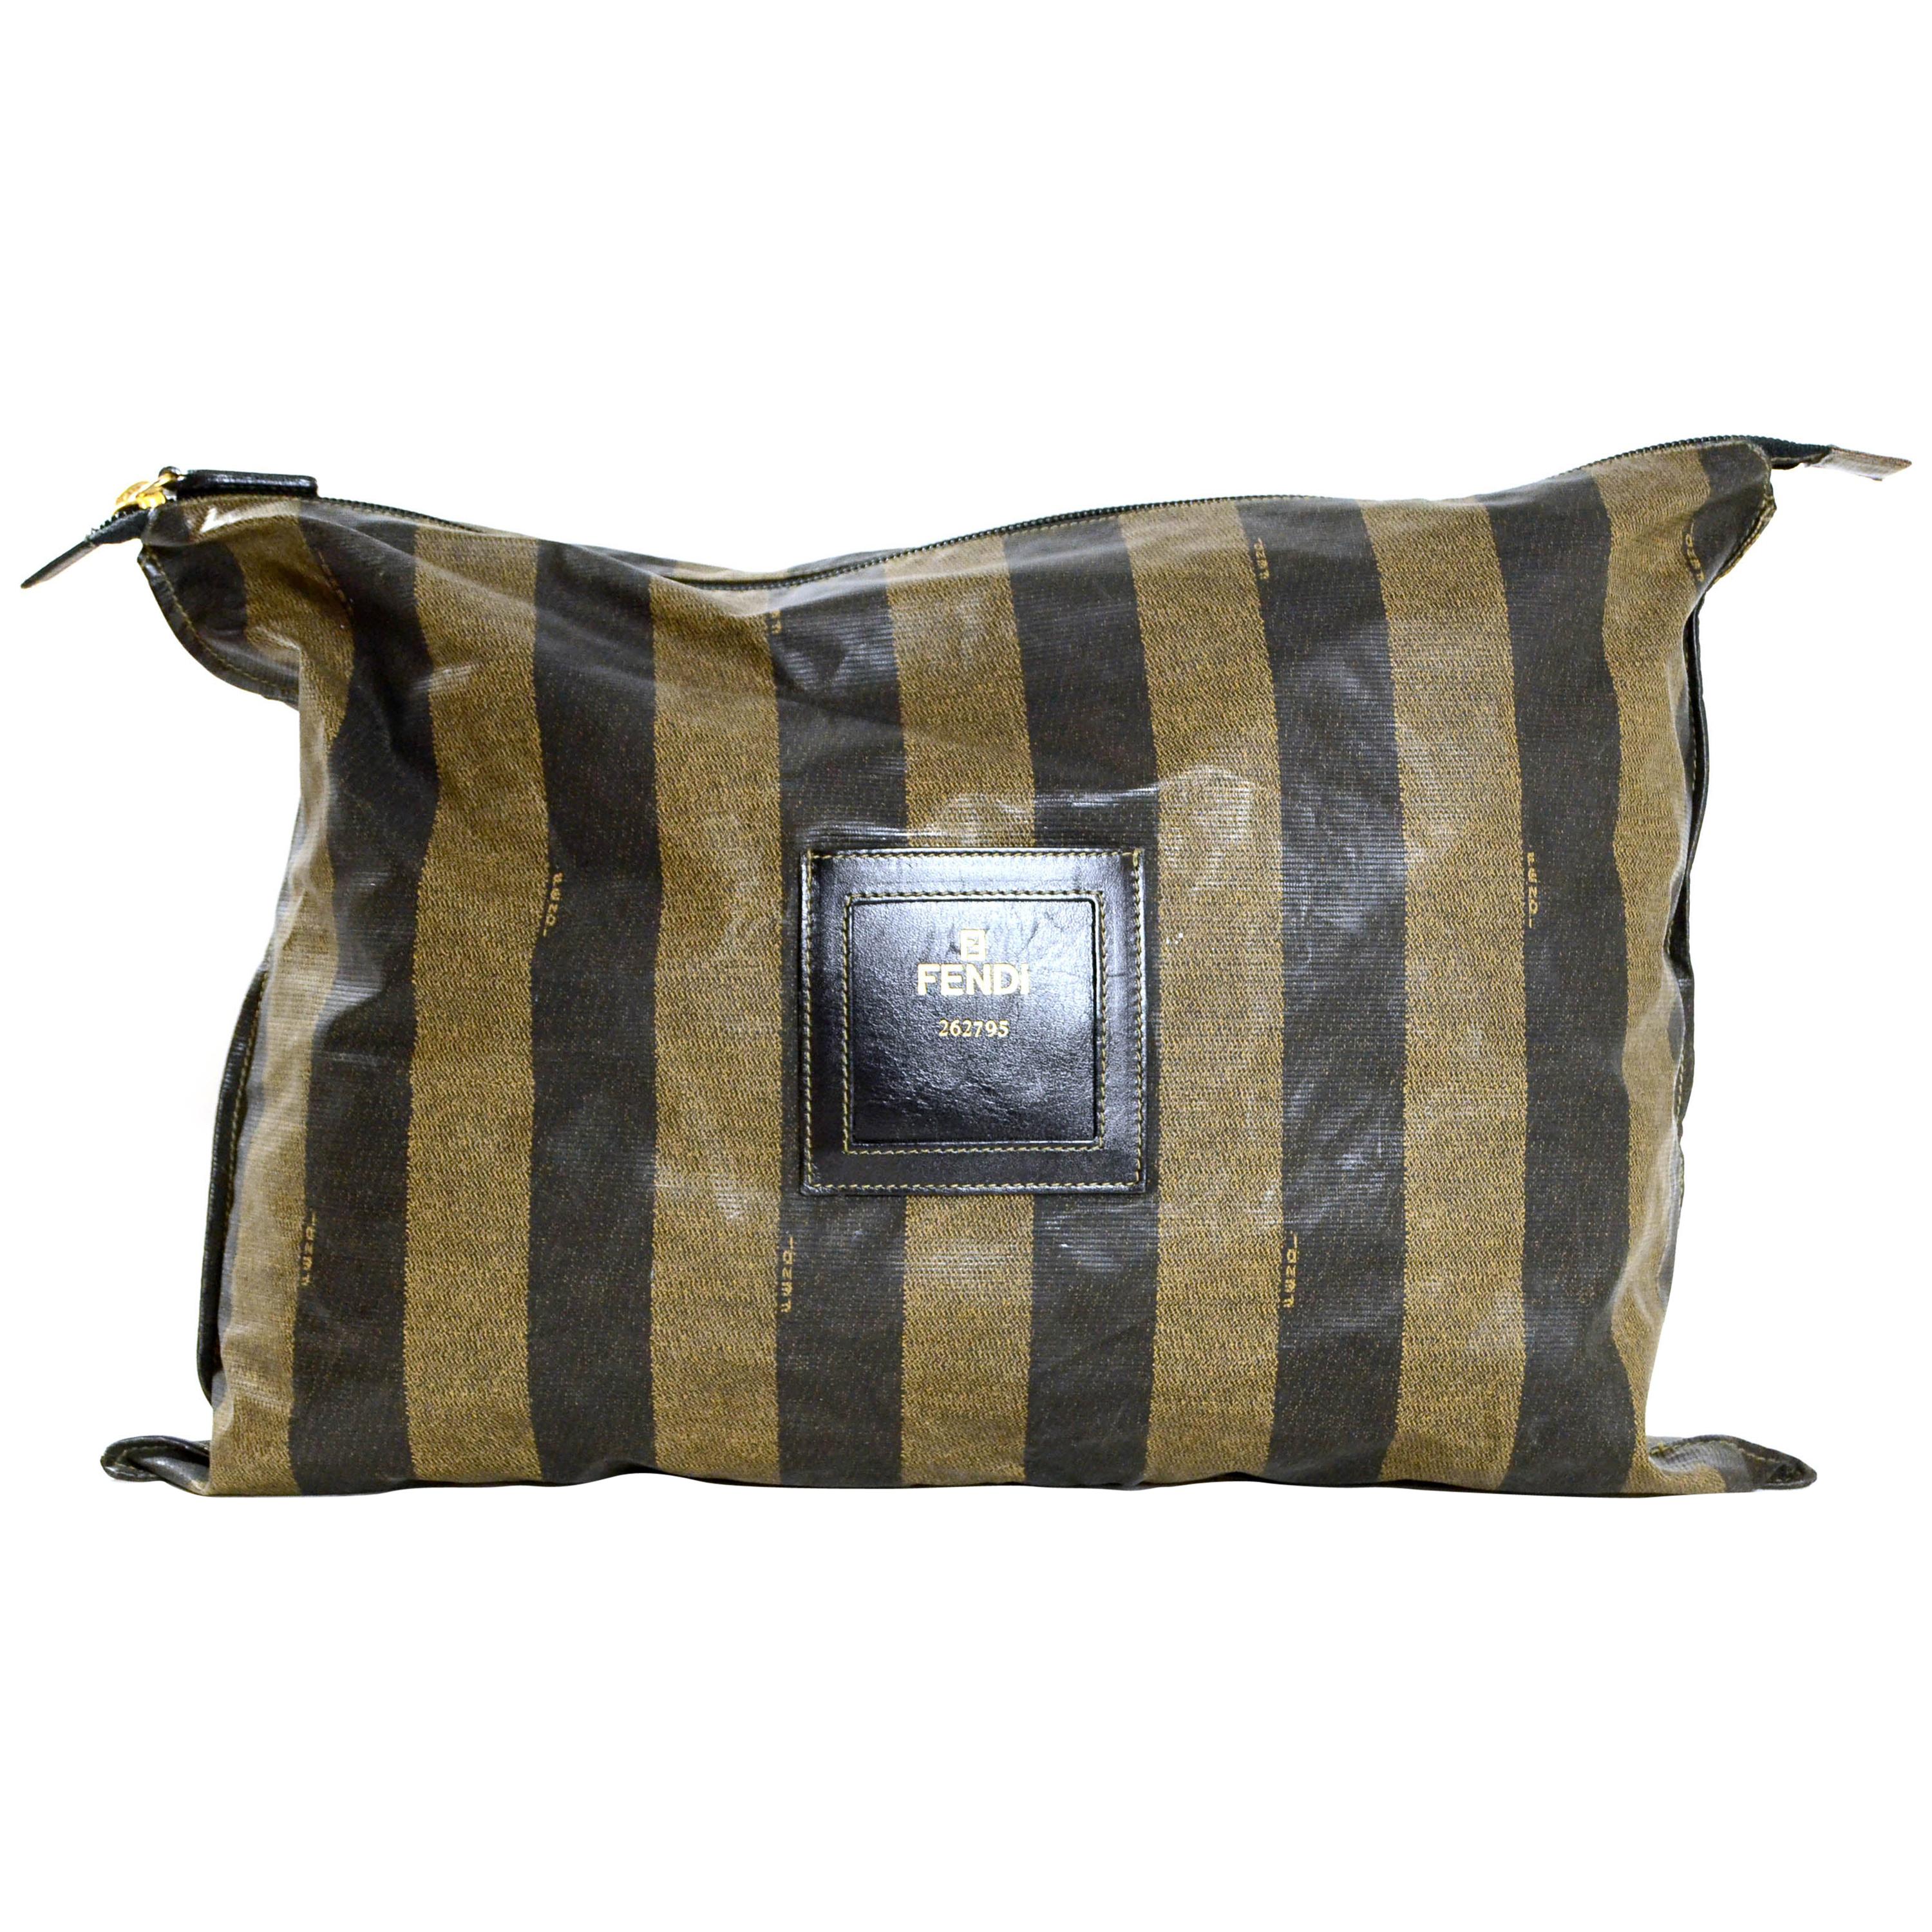 Fendi Vintage Brown Pequin Striped XL Zip Top Pouch Clutch Bag